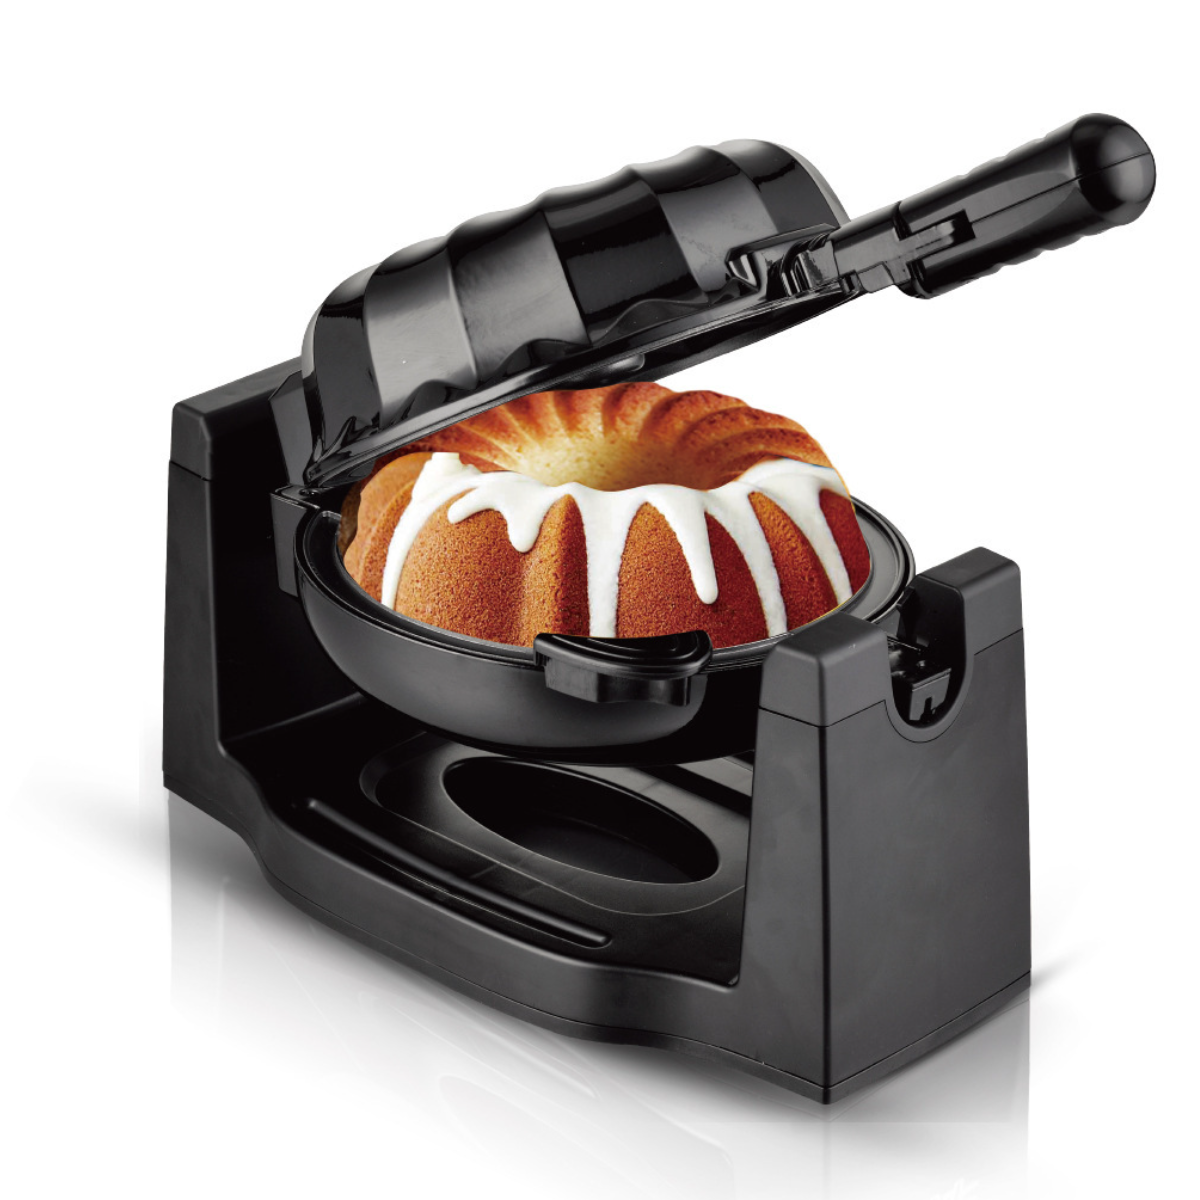 UWOT Flip-Cake-Maschine 1800 W-Schwarz: zu Antihaftbeschichtung reinigen, (899 Guglhupfbäcker Gleichmäßige leicht 1) Schwarz Watt, Schlitze: Erwärmung